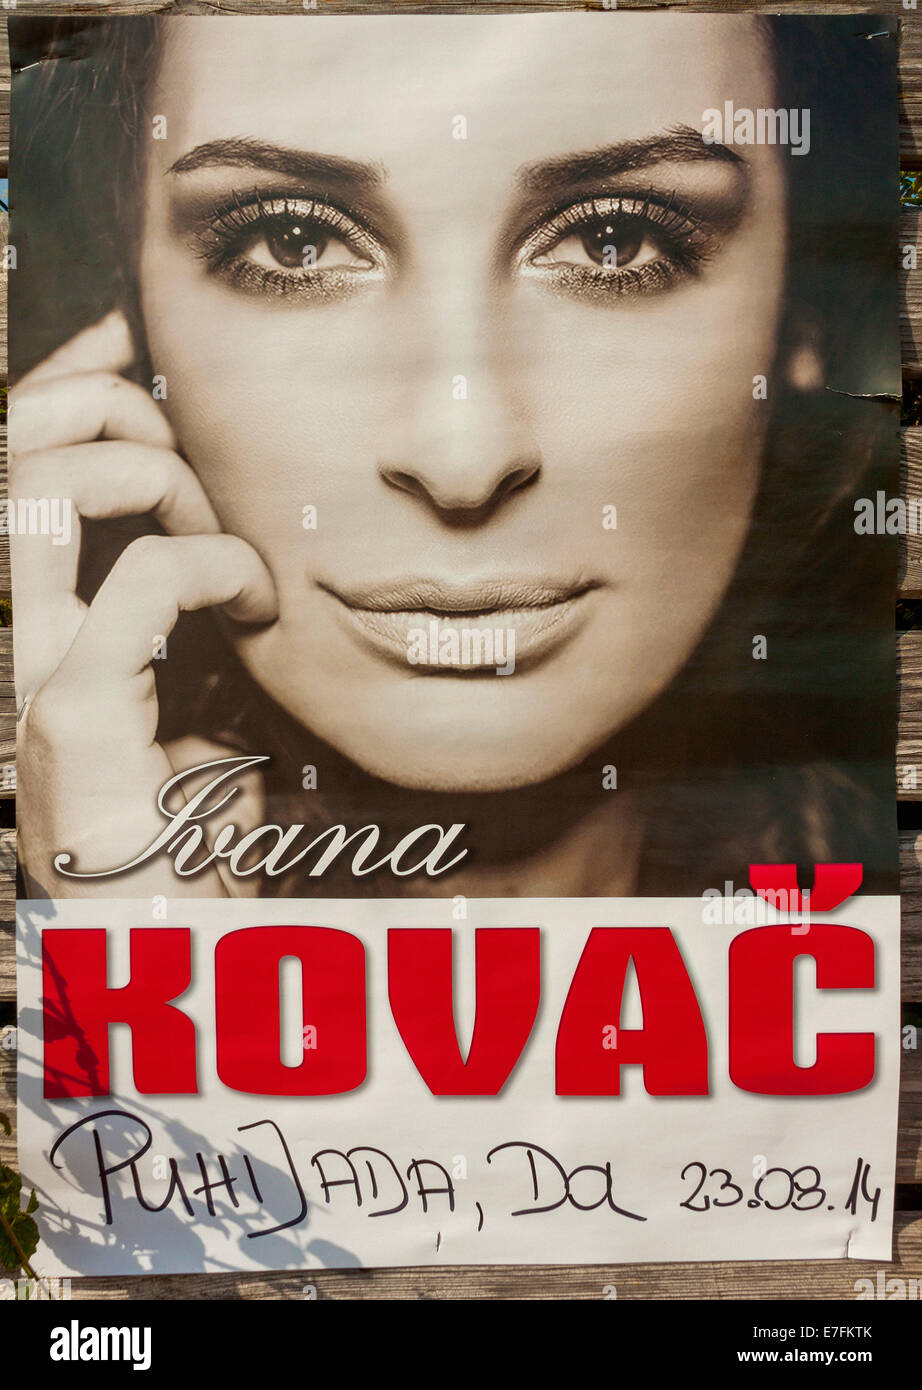 Ivana Kovac poster advertising her concert in Puhijada in Dol village, displayed in Jelsa, Hvar island, Croatia Stock Photo